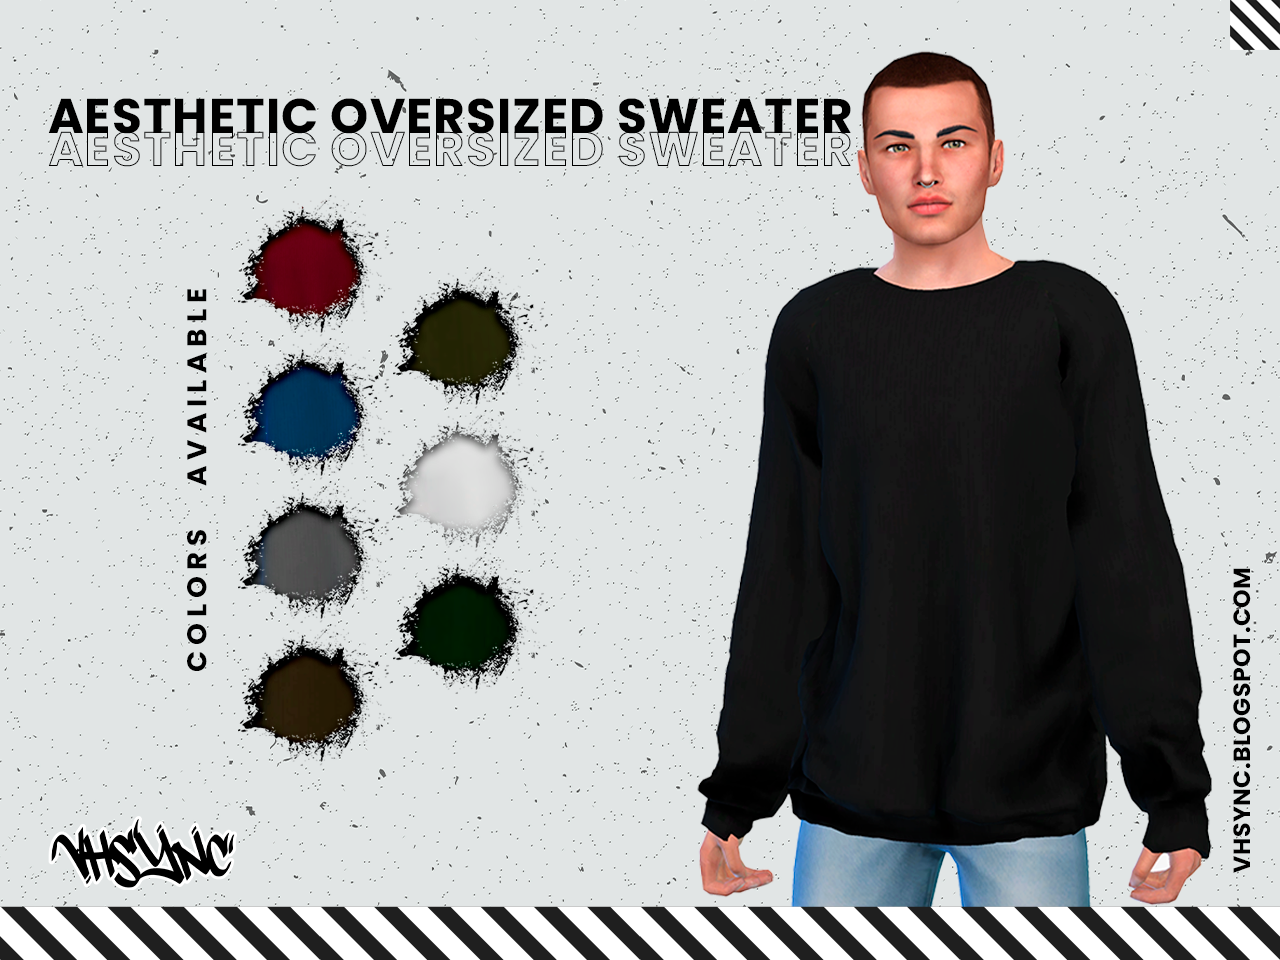 [VHSync] Aesthetic Oversized Sweater - The Sims 4 Create a Sim - CurseForge